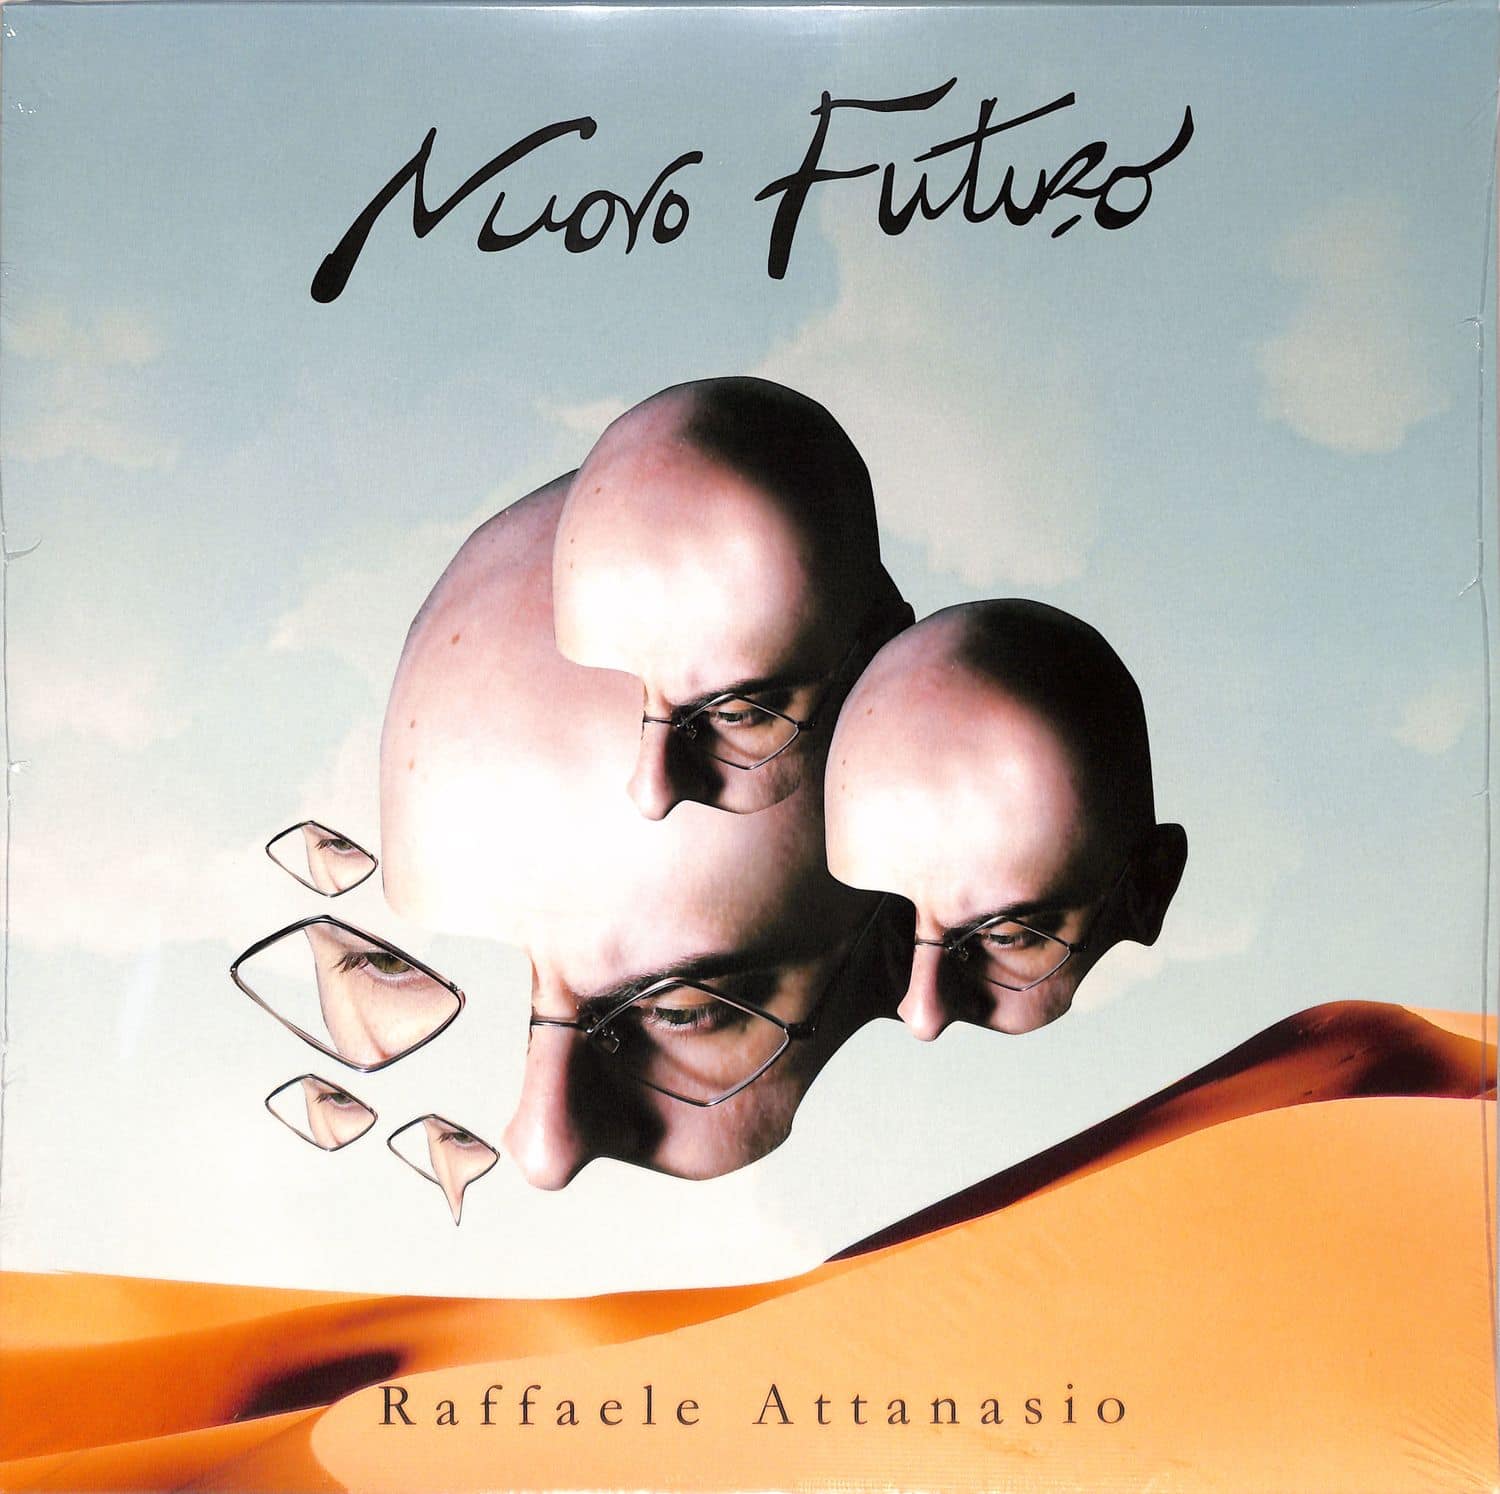 Raffaele Attanasio - NUOVO FUTURO 